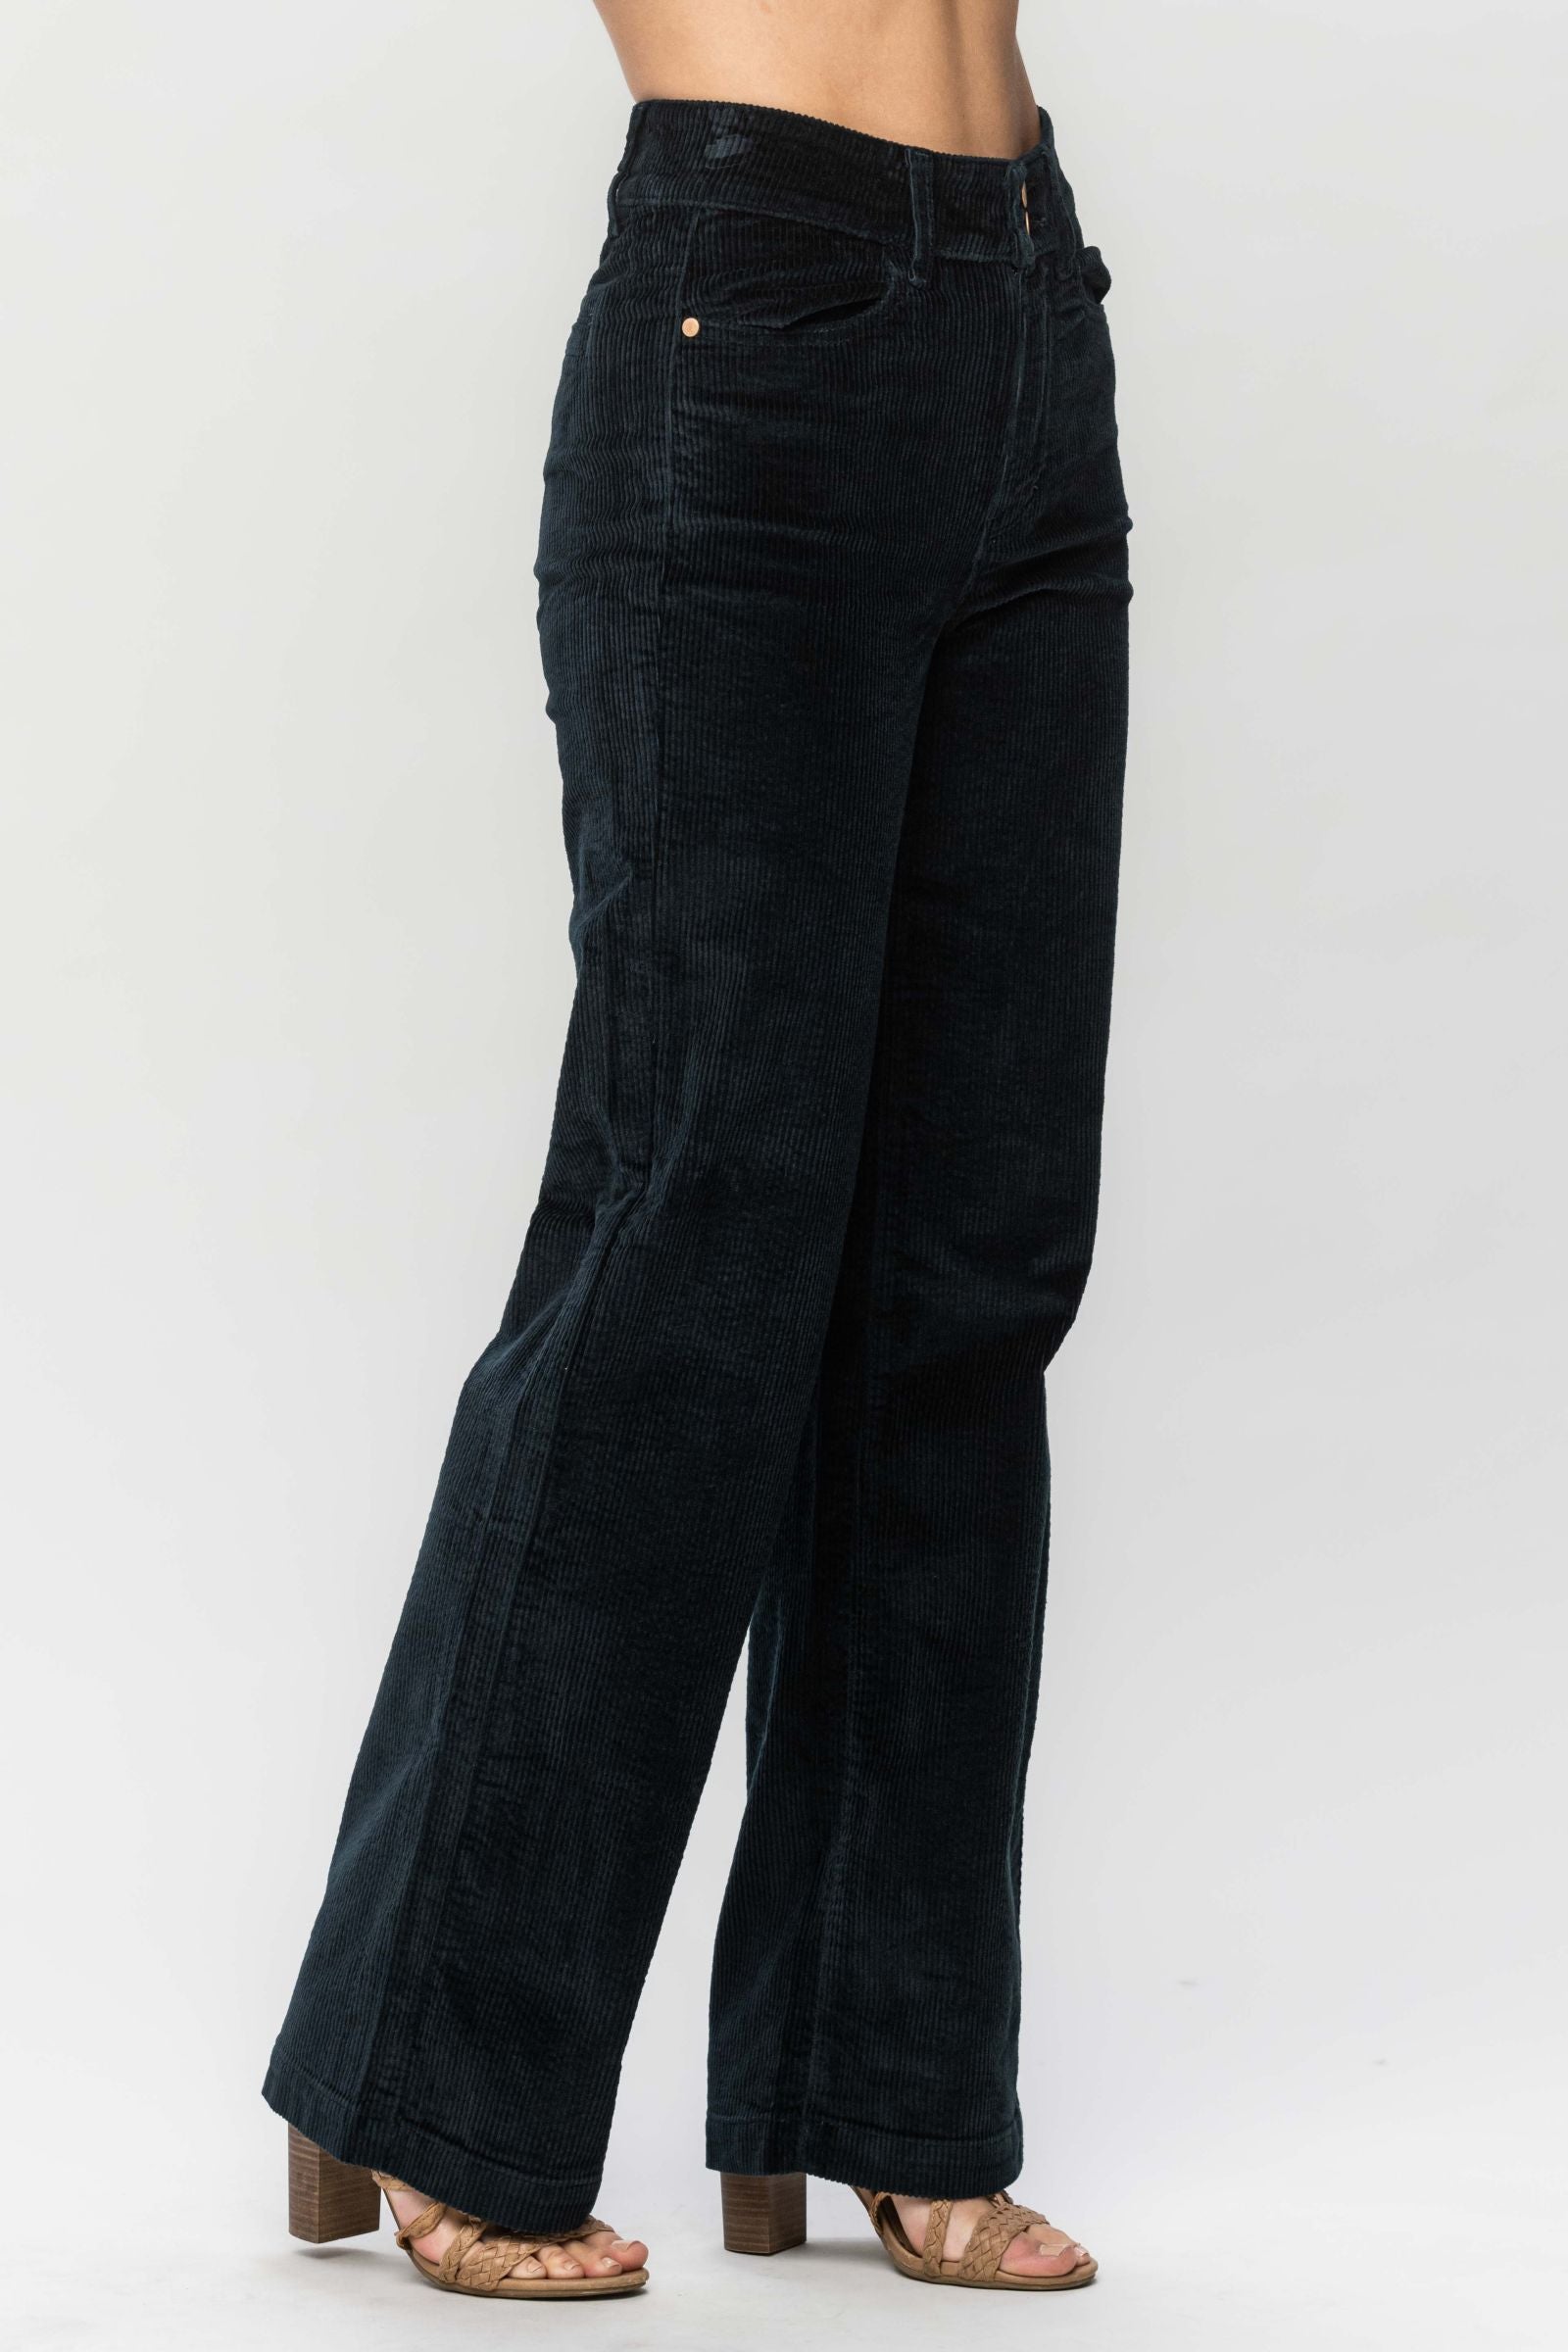 Judy Blue Jeans | Plus Size Emerald High Rise Corduroy Skirt JB2813-PL 3X-Large / Lavender